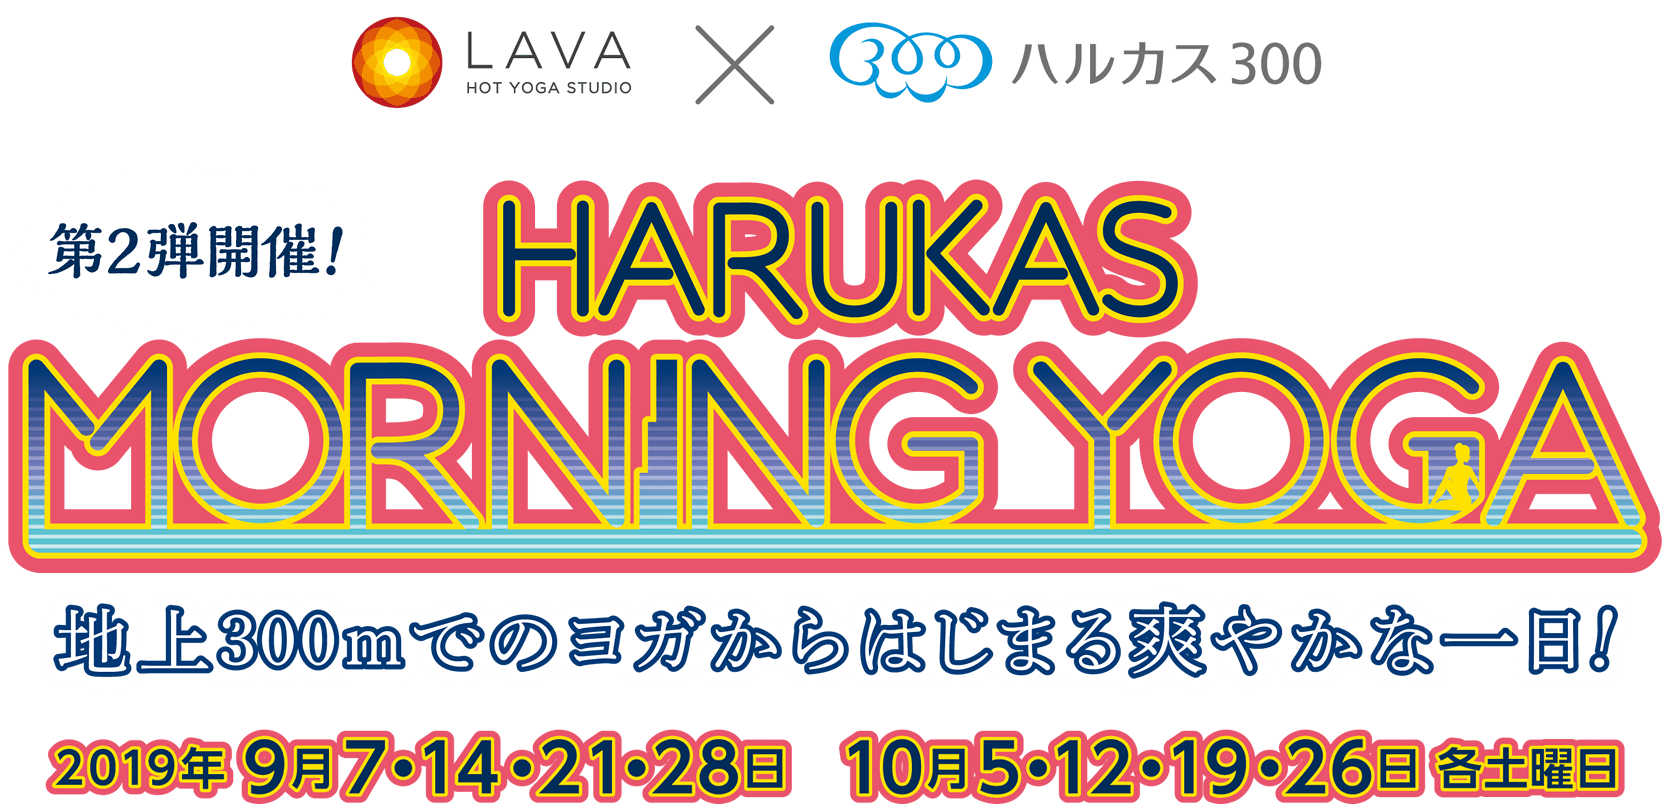 HOT YOGA STUDIO LAVA×ハルカス300 HARUKAS MORNING YOGA 地上300mでのヨガからはじまる爽やかな一日！2019年 9月7･14･21･28　10月5･12･19･26 各土曜日